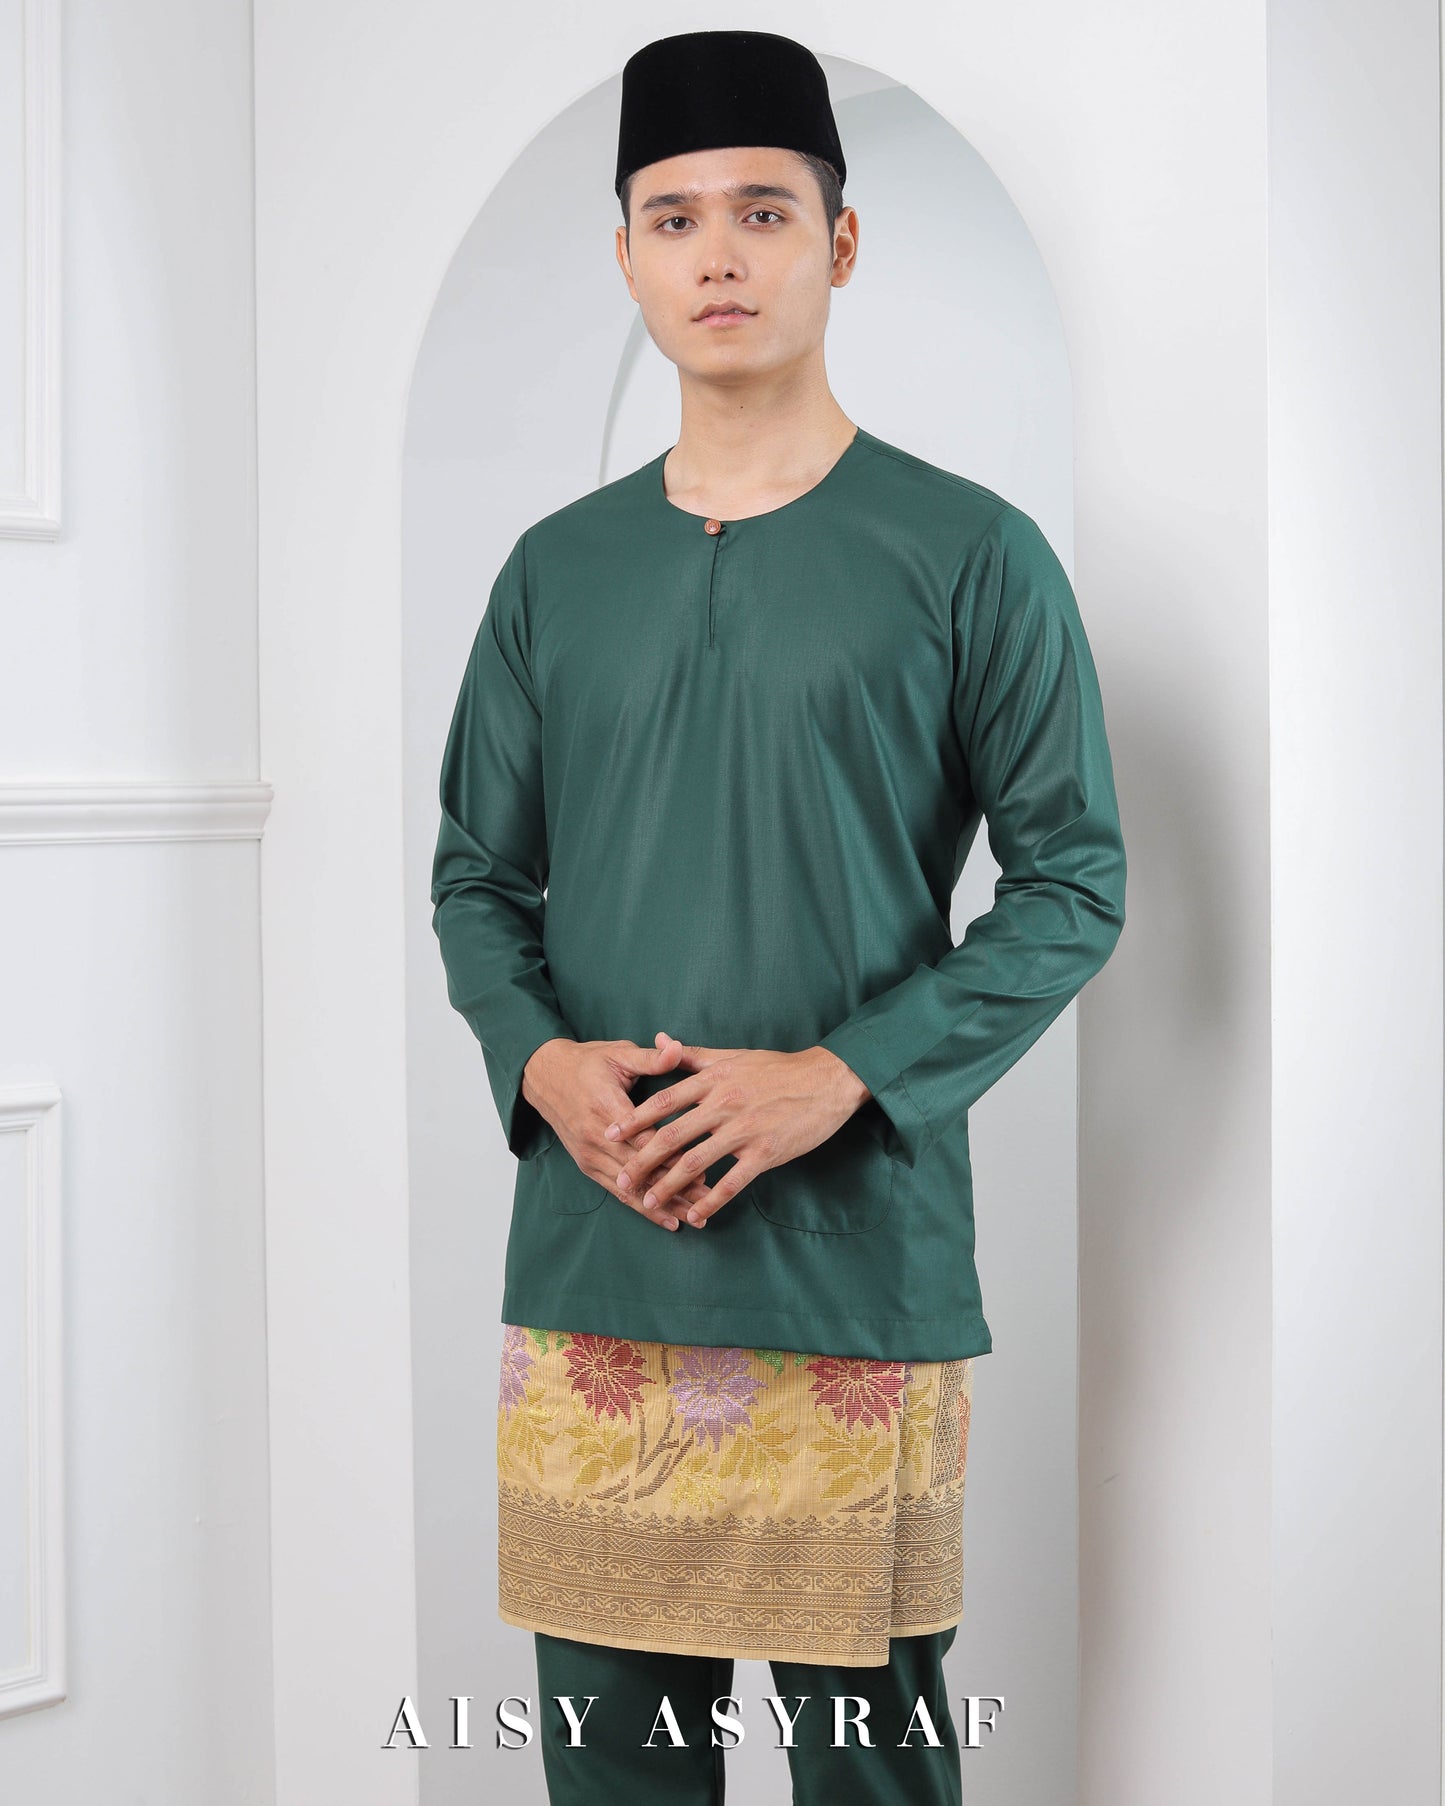 Baju Melayu Reyza - Emerald Green